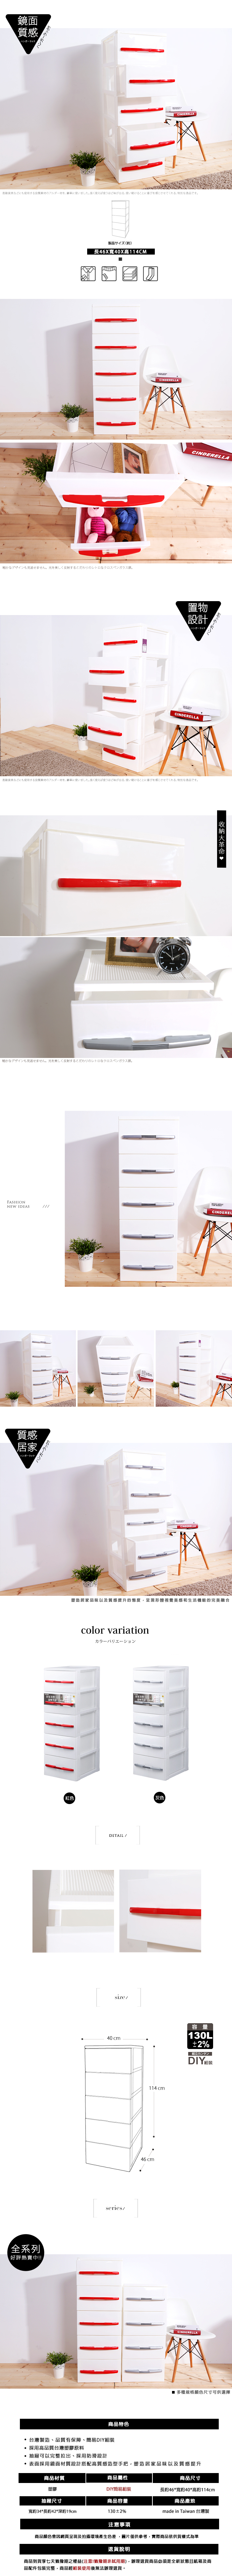 【HOUSE】日式簡約收納櫃(四層/五層) DIY組裝/置物櫃/衣物收納